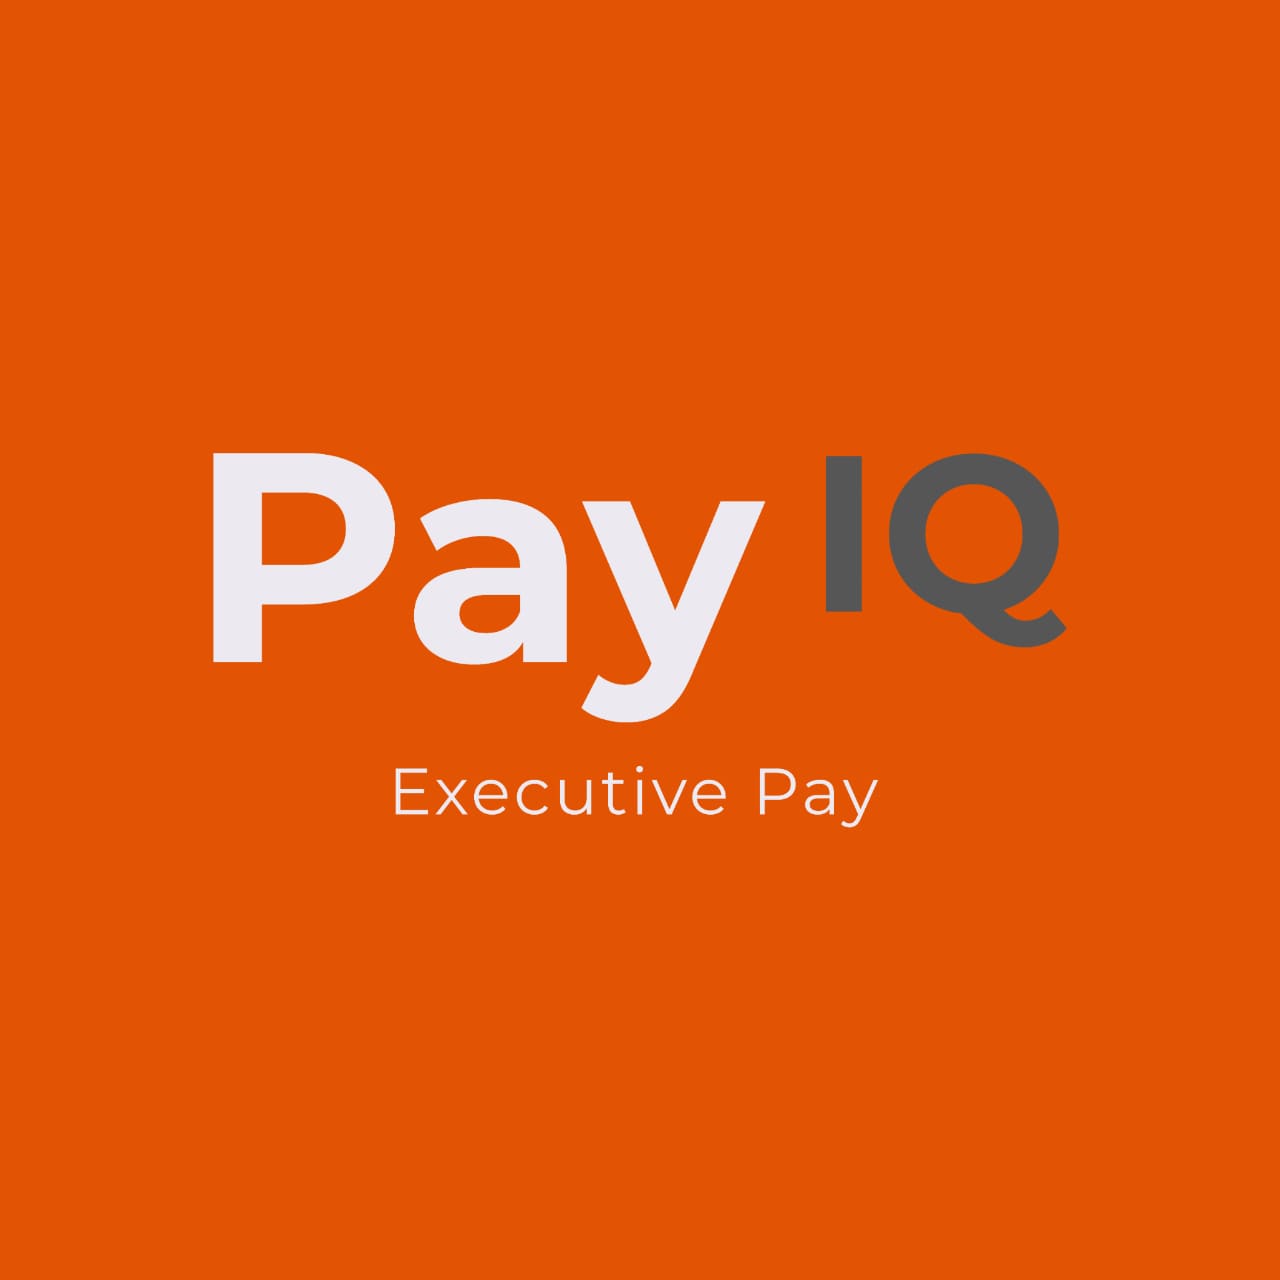 PayIQ Executive Pay